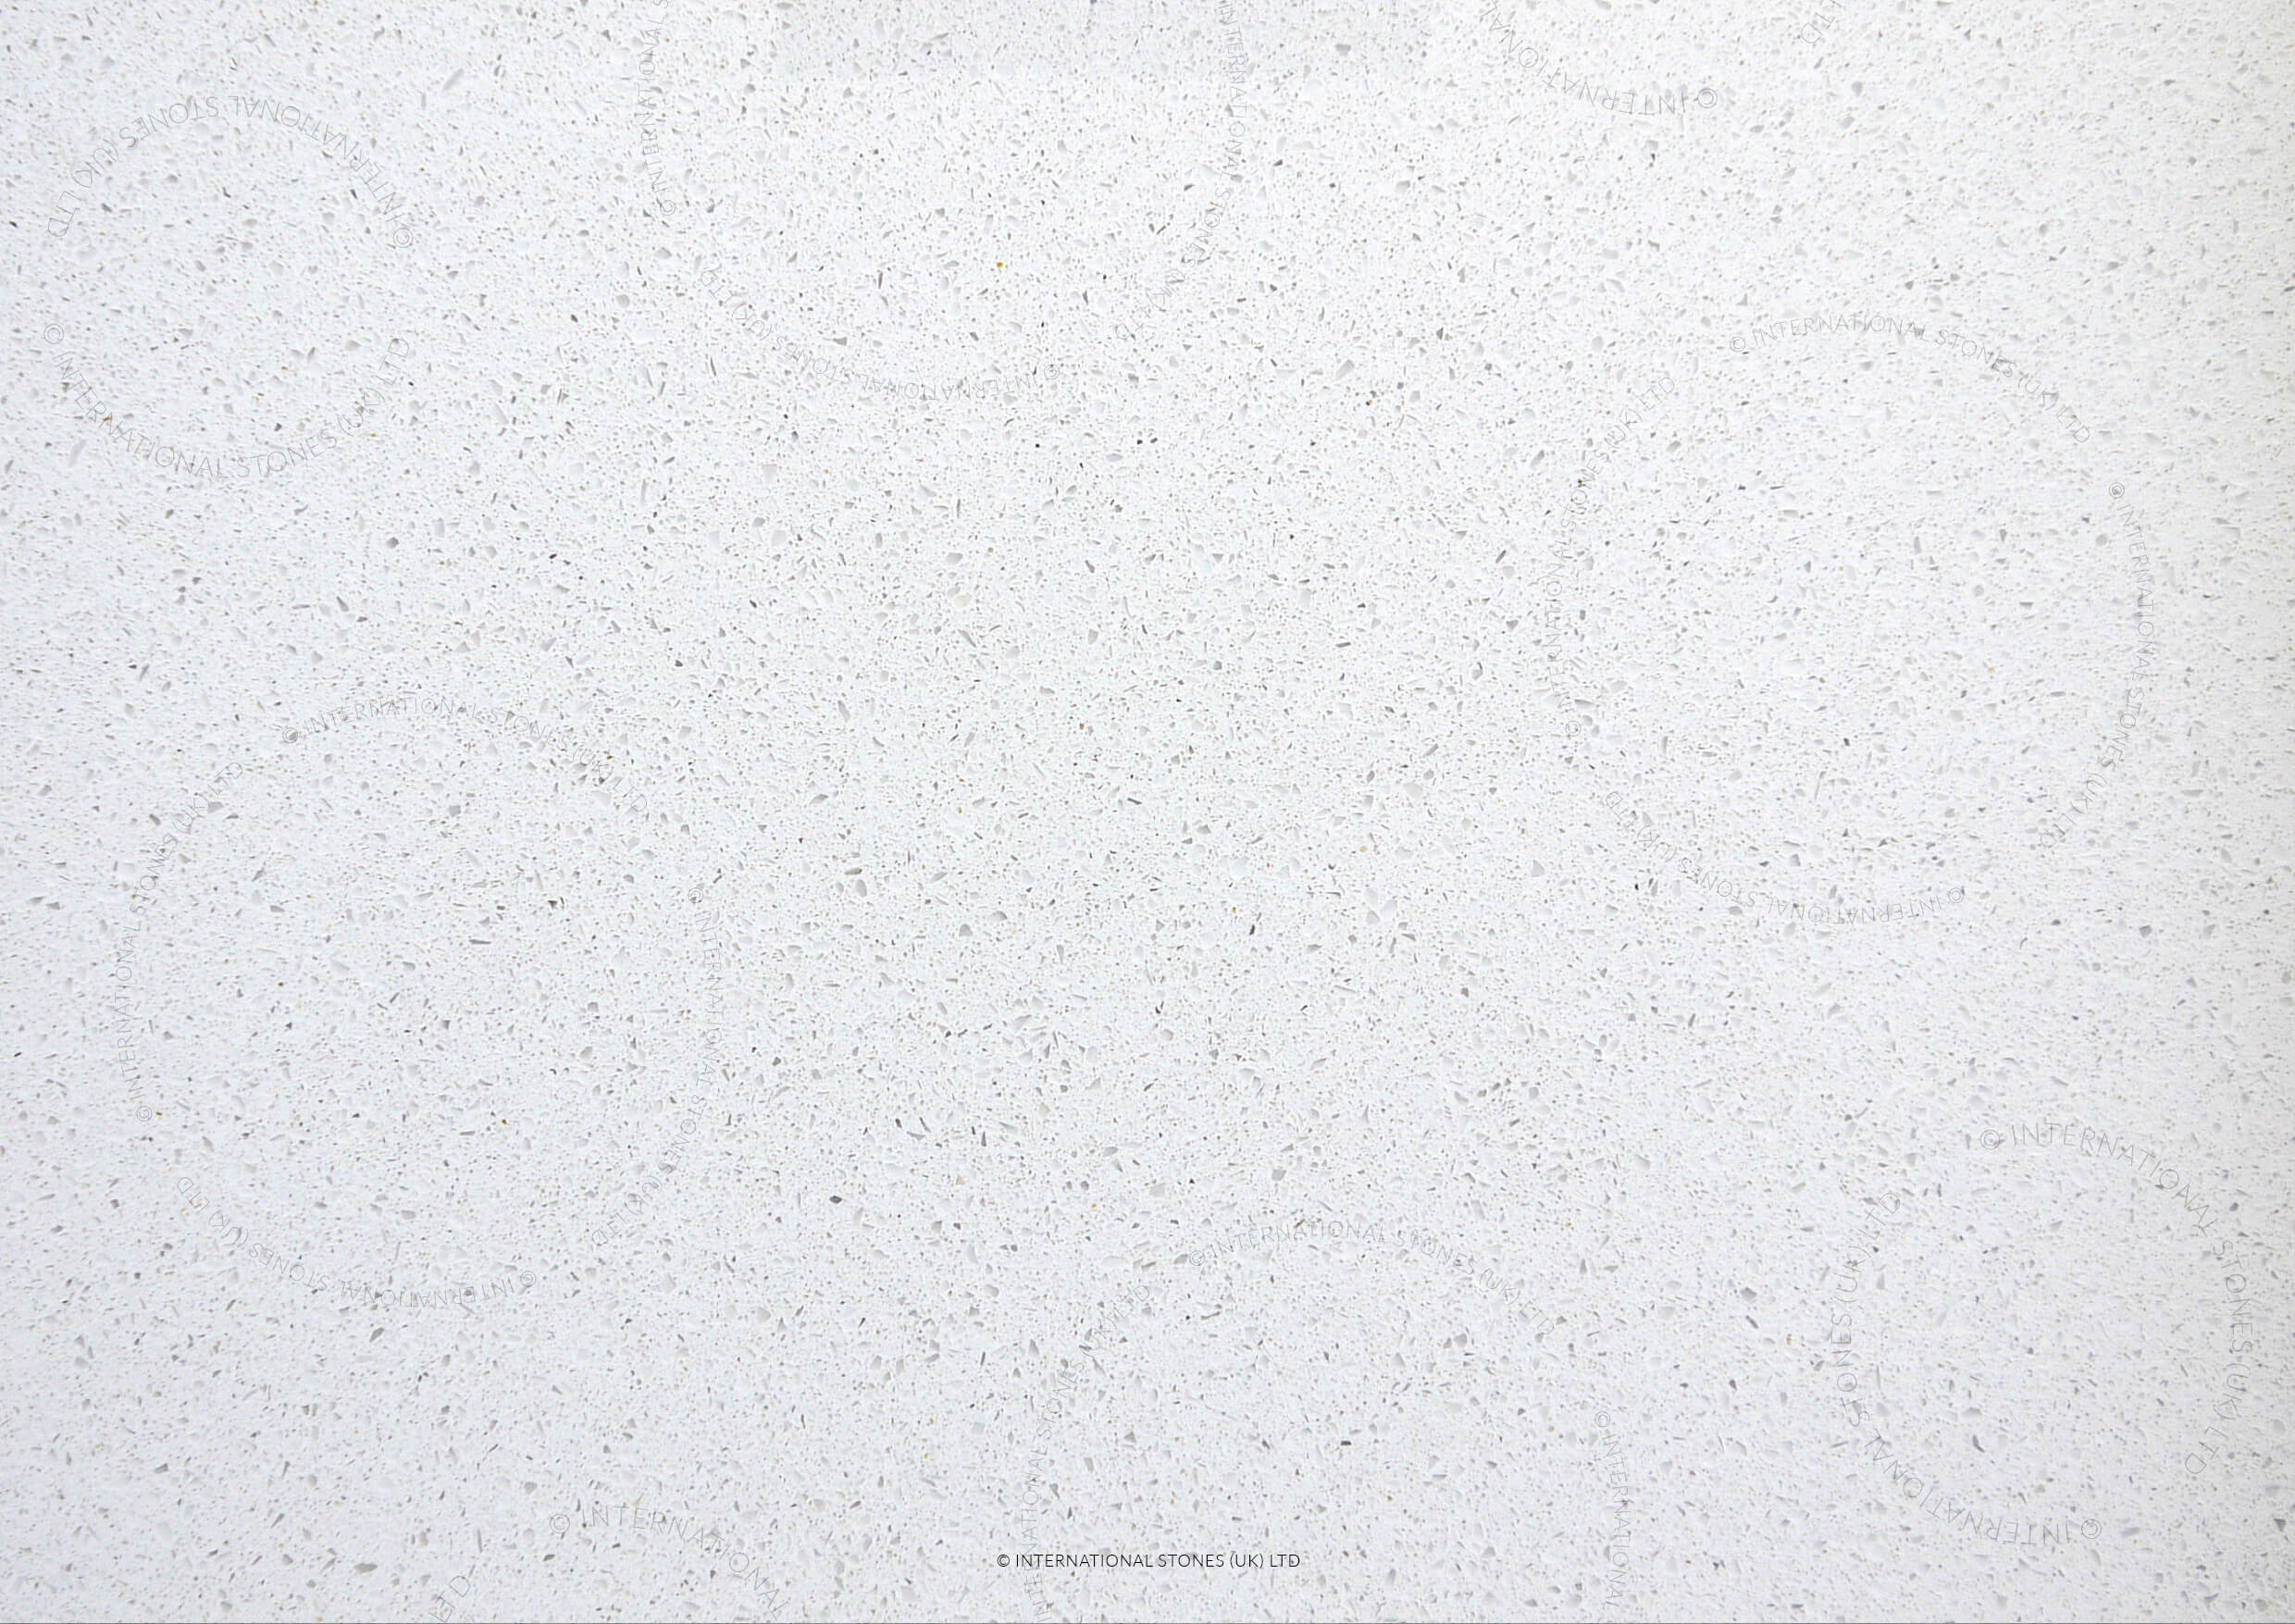 International Stone IQ Blanco Maple - coventry - Ryton-on-Dunsmore